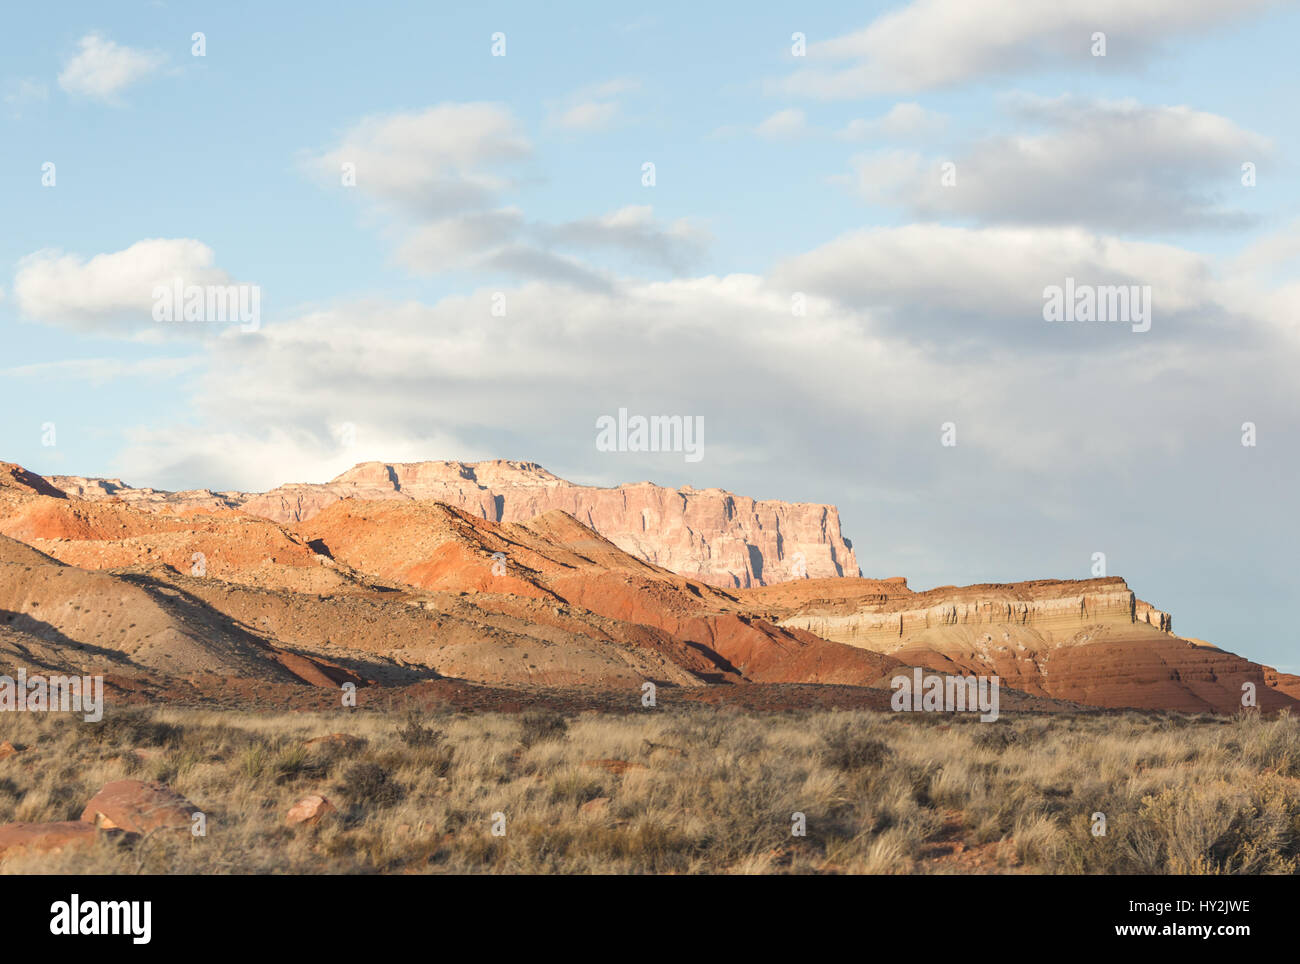 Remote desert landscape in northern Arizona, USA. Stock Photo